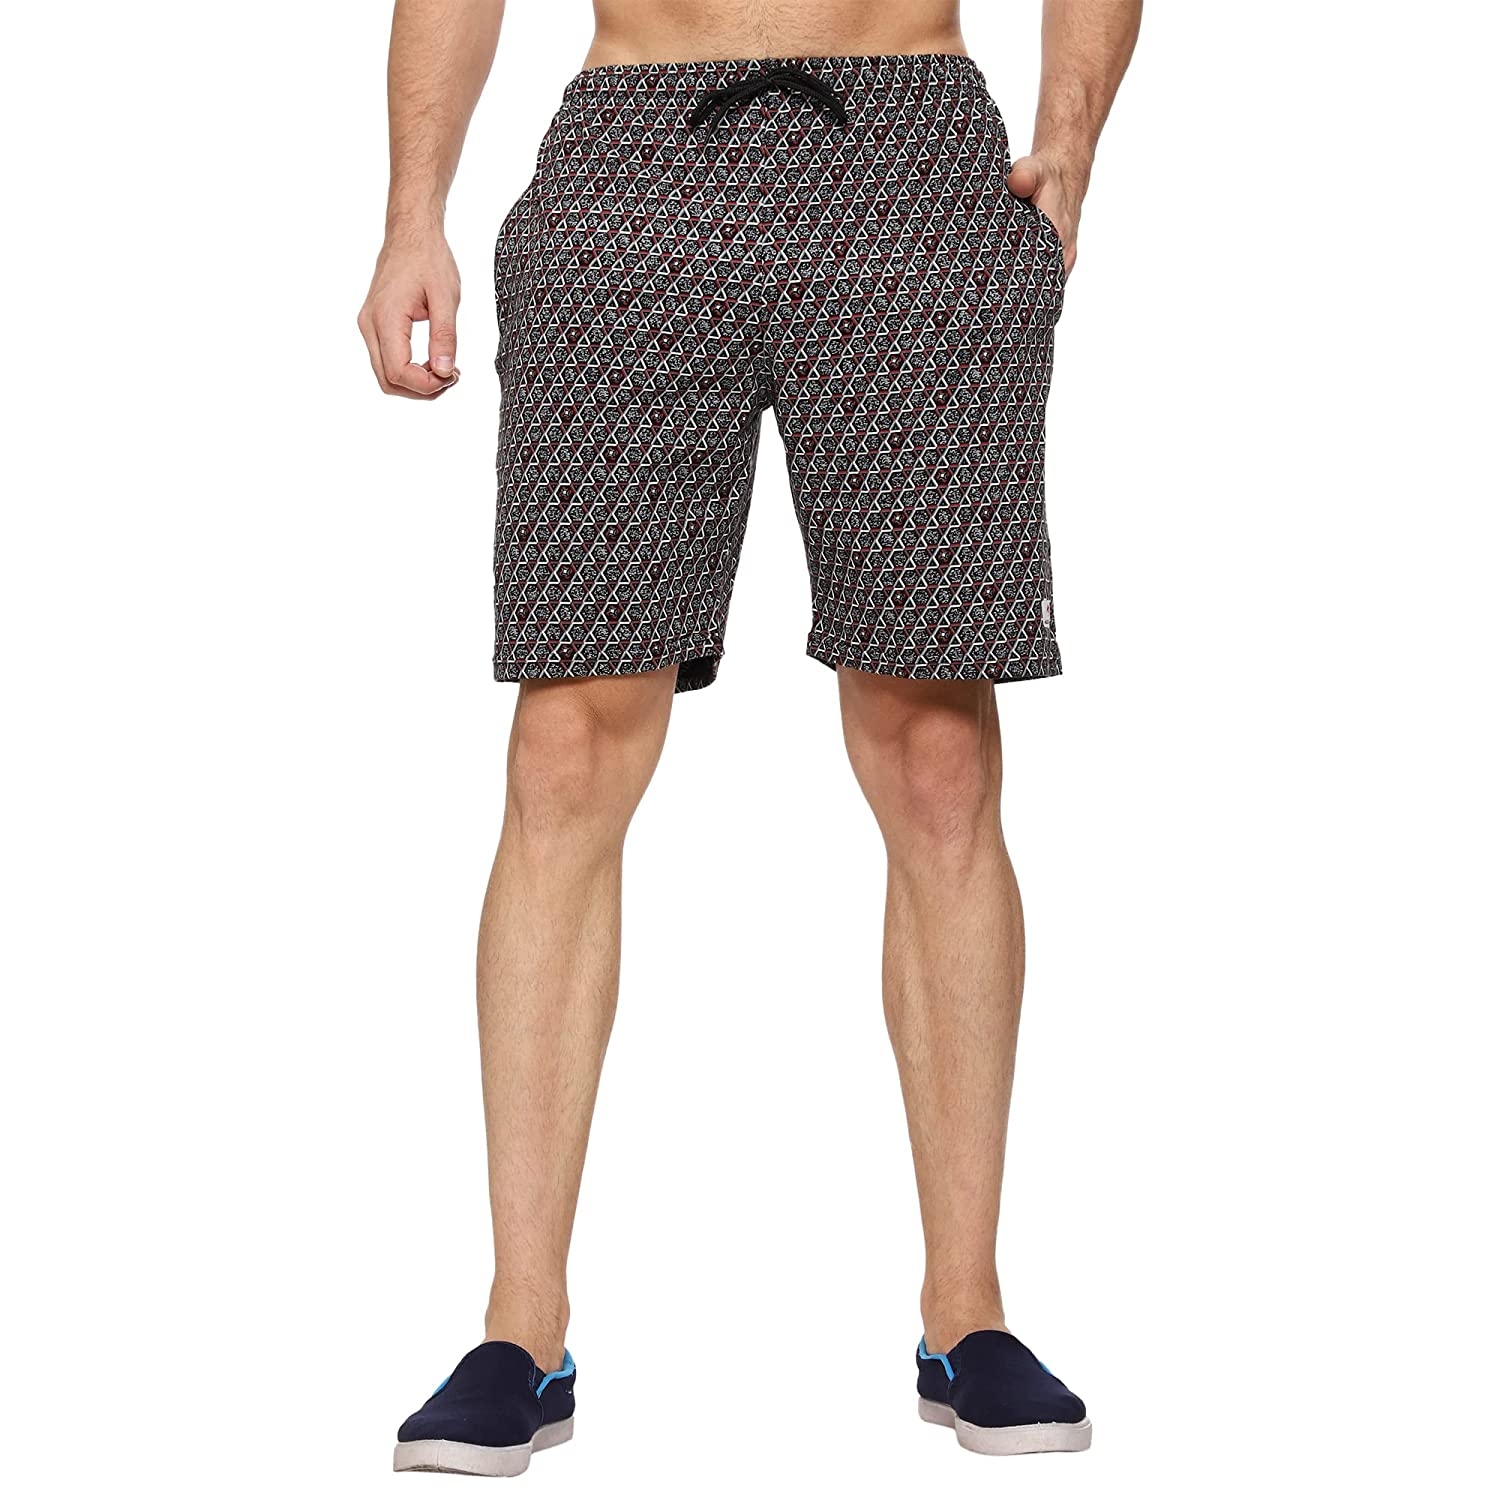 Moovfree | Moovfree Mens Cotton Bermuda Printed Casual Shorts Regular Fit Lounge Shorts with Zip Pockets, Congo Brown